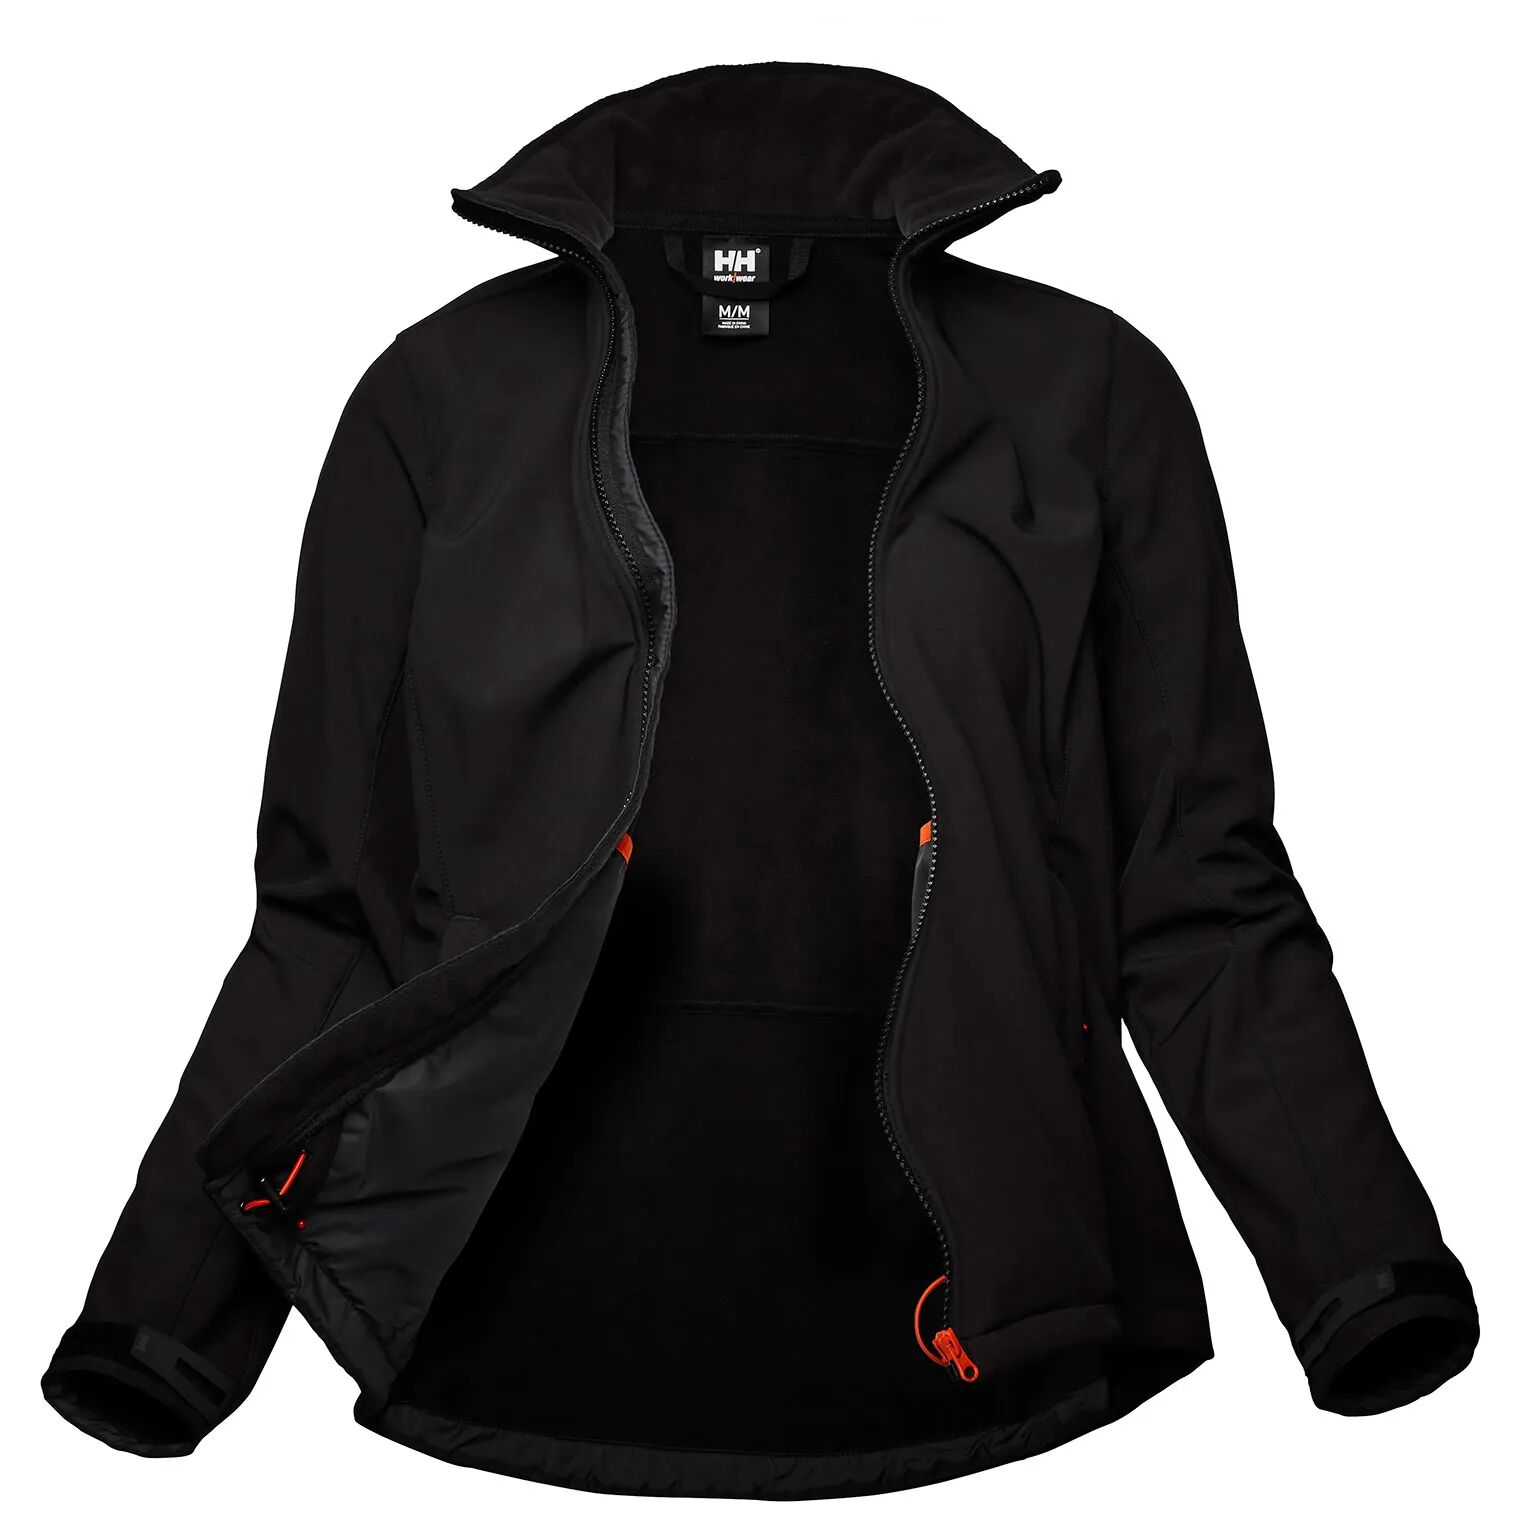 HH Workwear Helly Hansen WorkwearLuna Women's Waterproof Softshell Jacket Black L